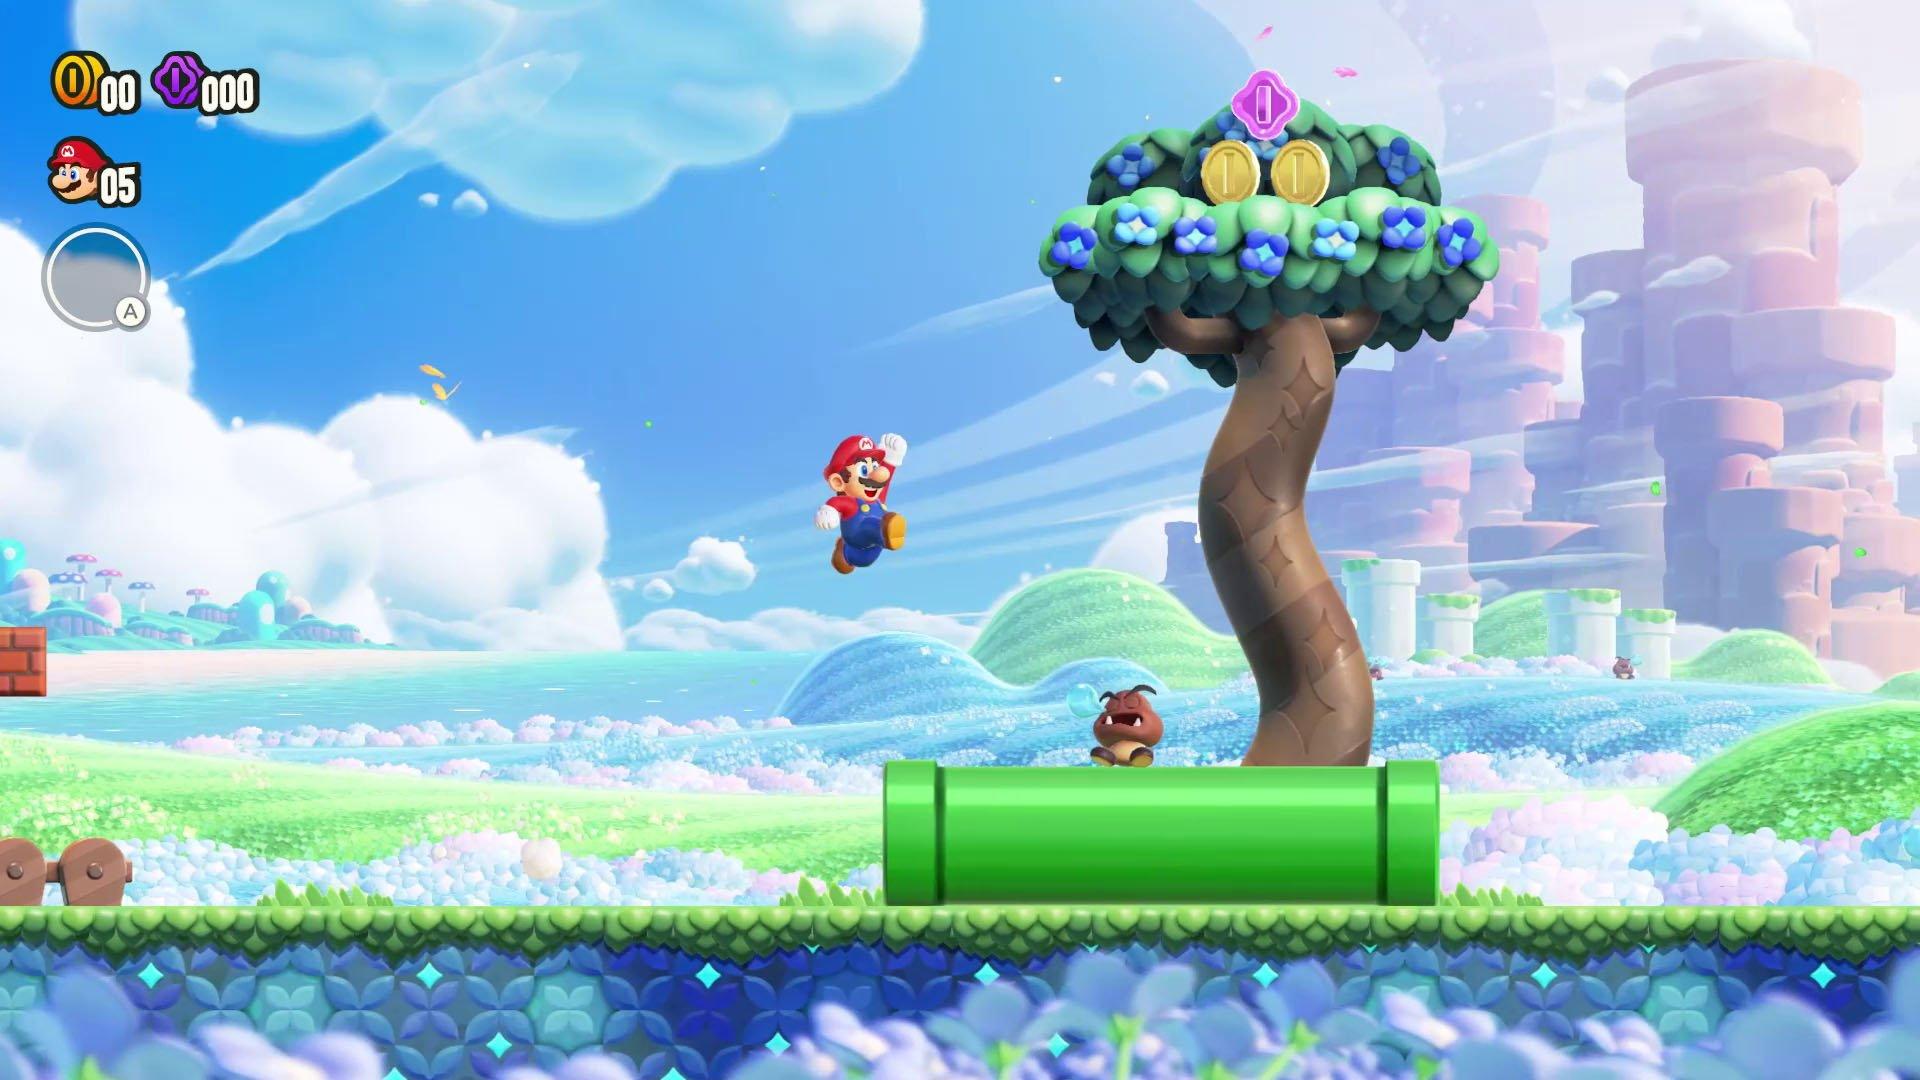 Super Mario Bros. Wonder: Nintendo Switch Game Gets New Look